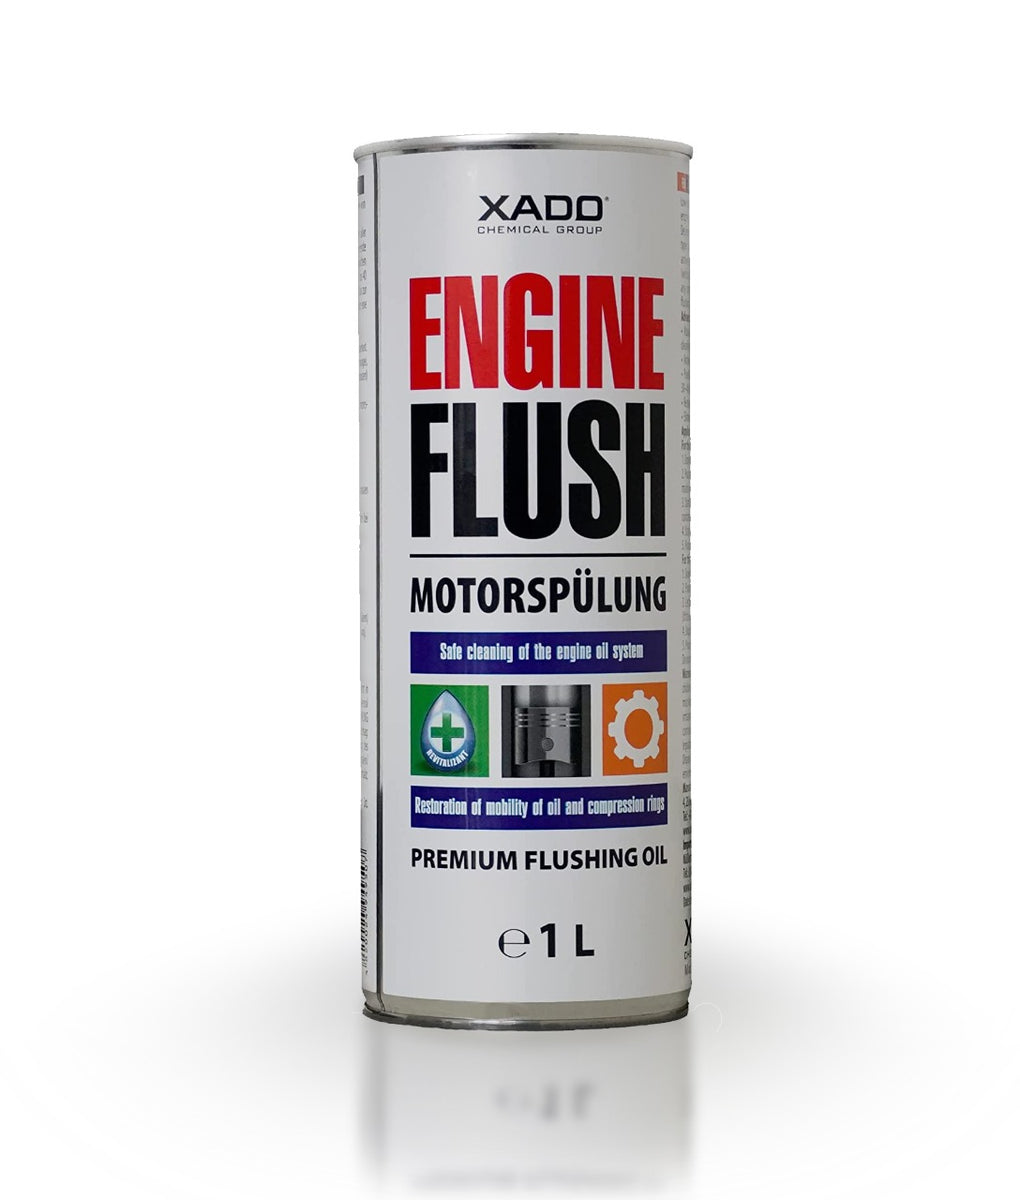 XADO TOTAL FLUSH nettoyant moteur rinçage moteur huile nettoyant